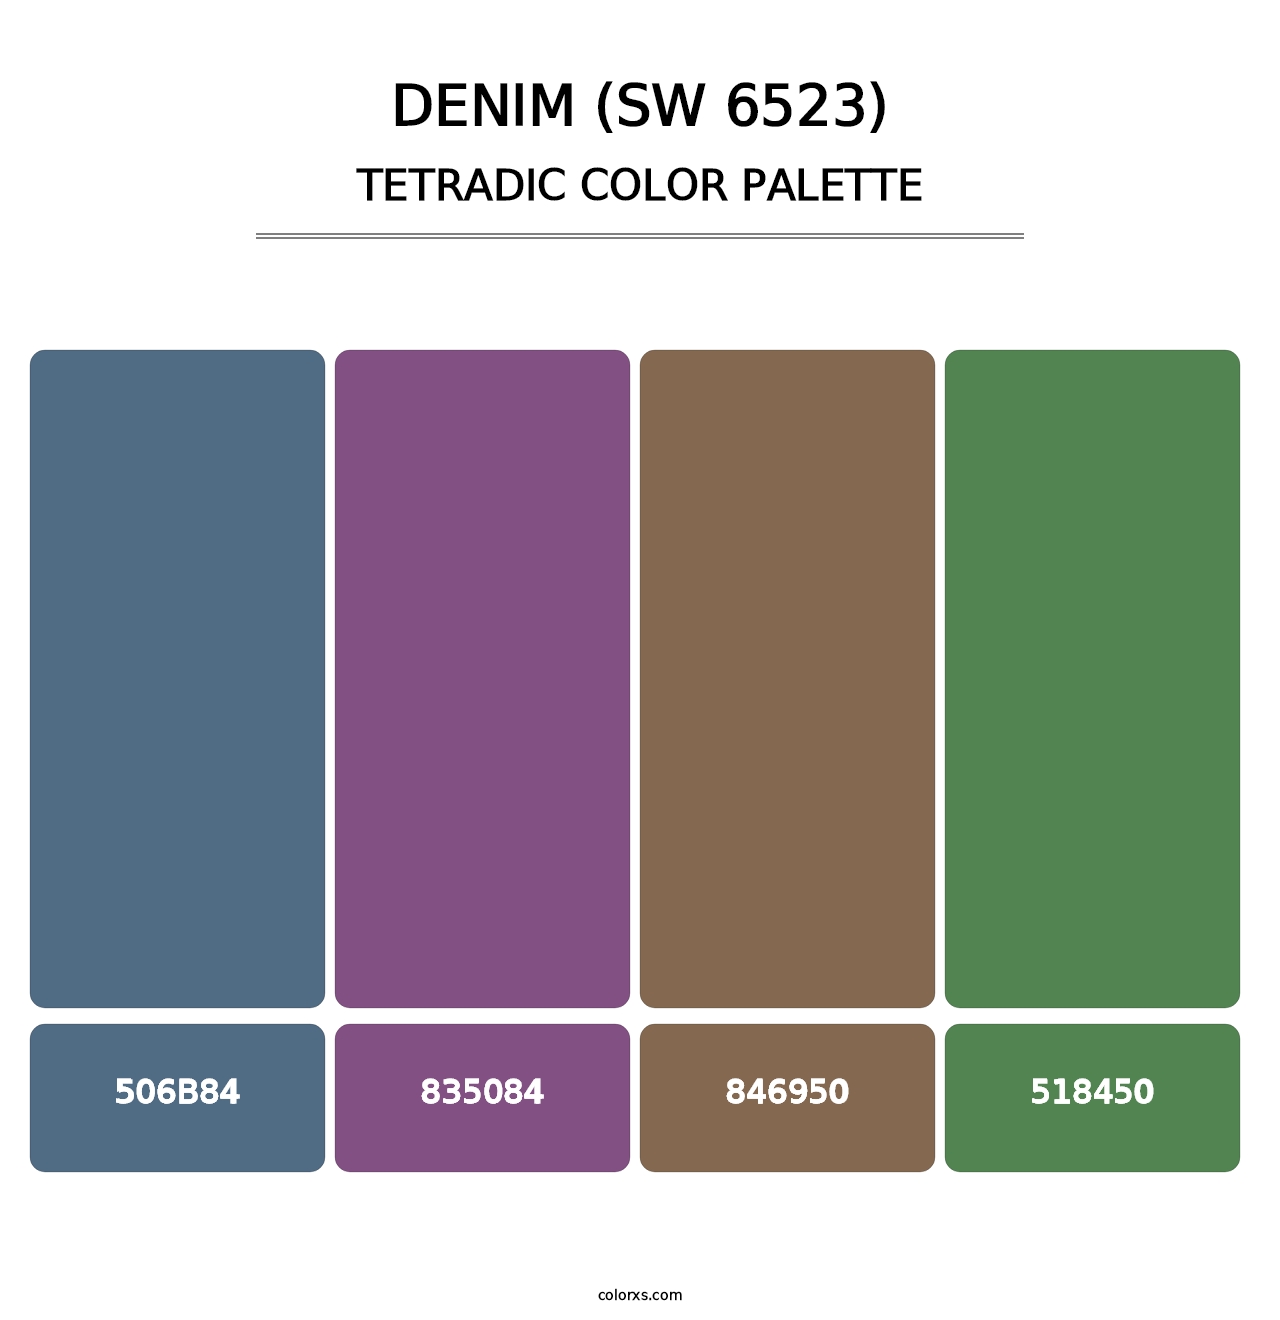 Denim (SW 6523) - Tetradic Color Palette